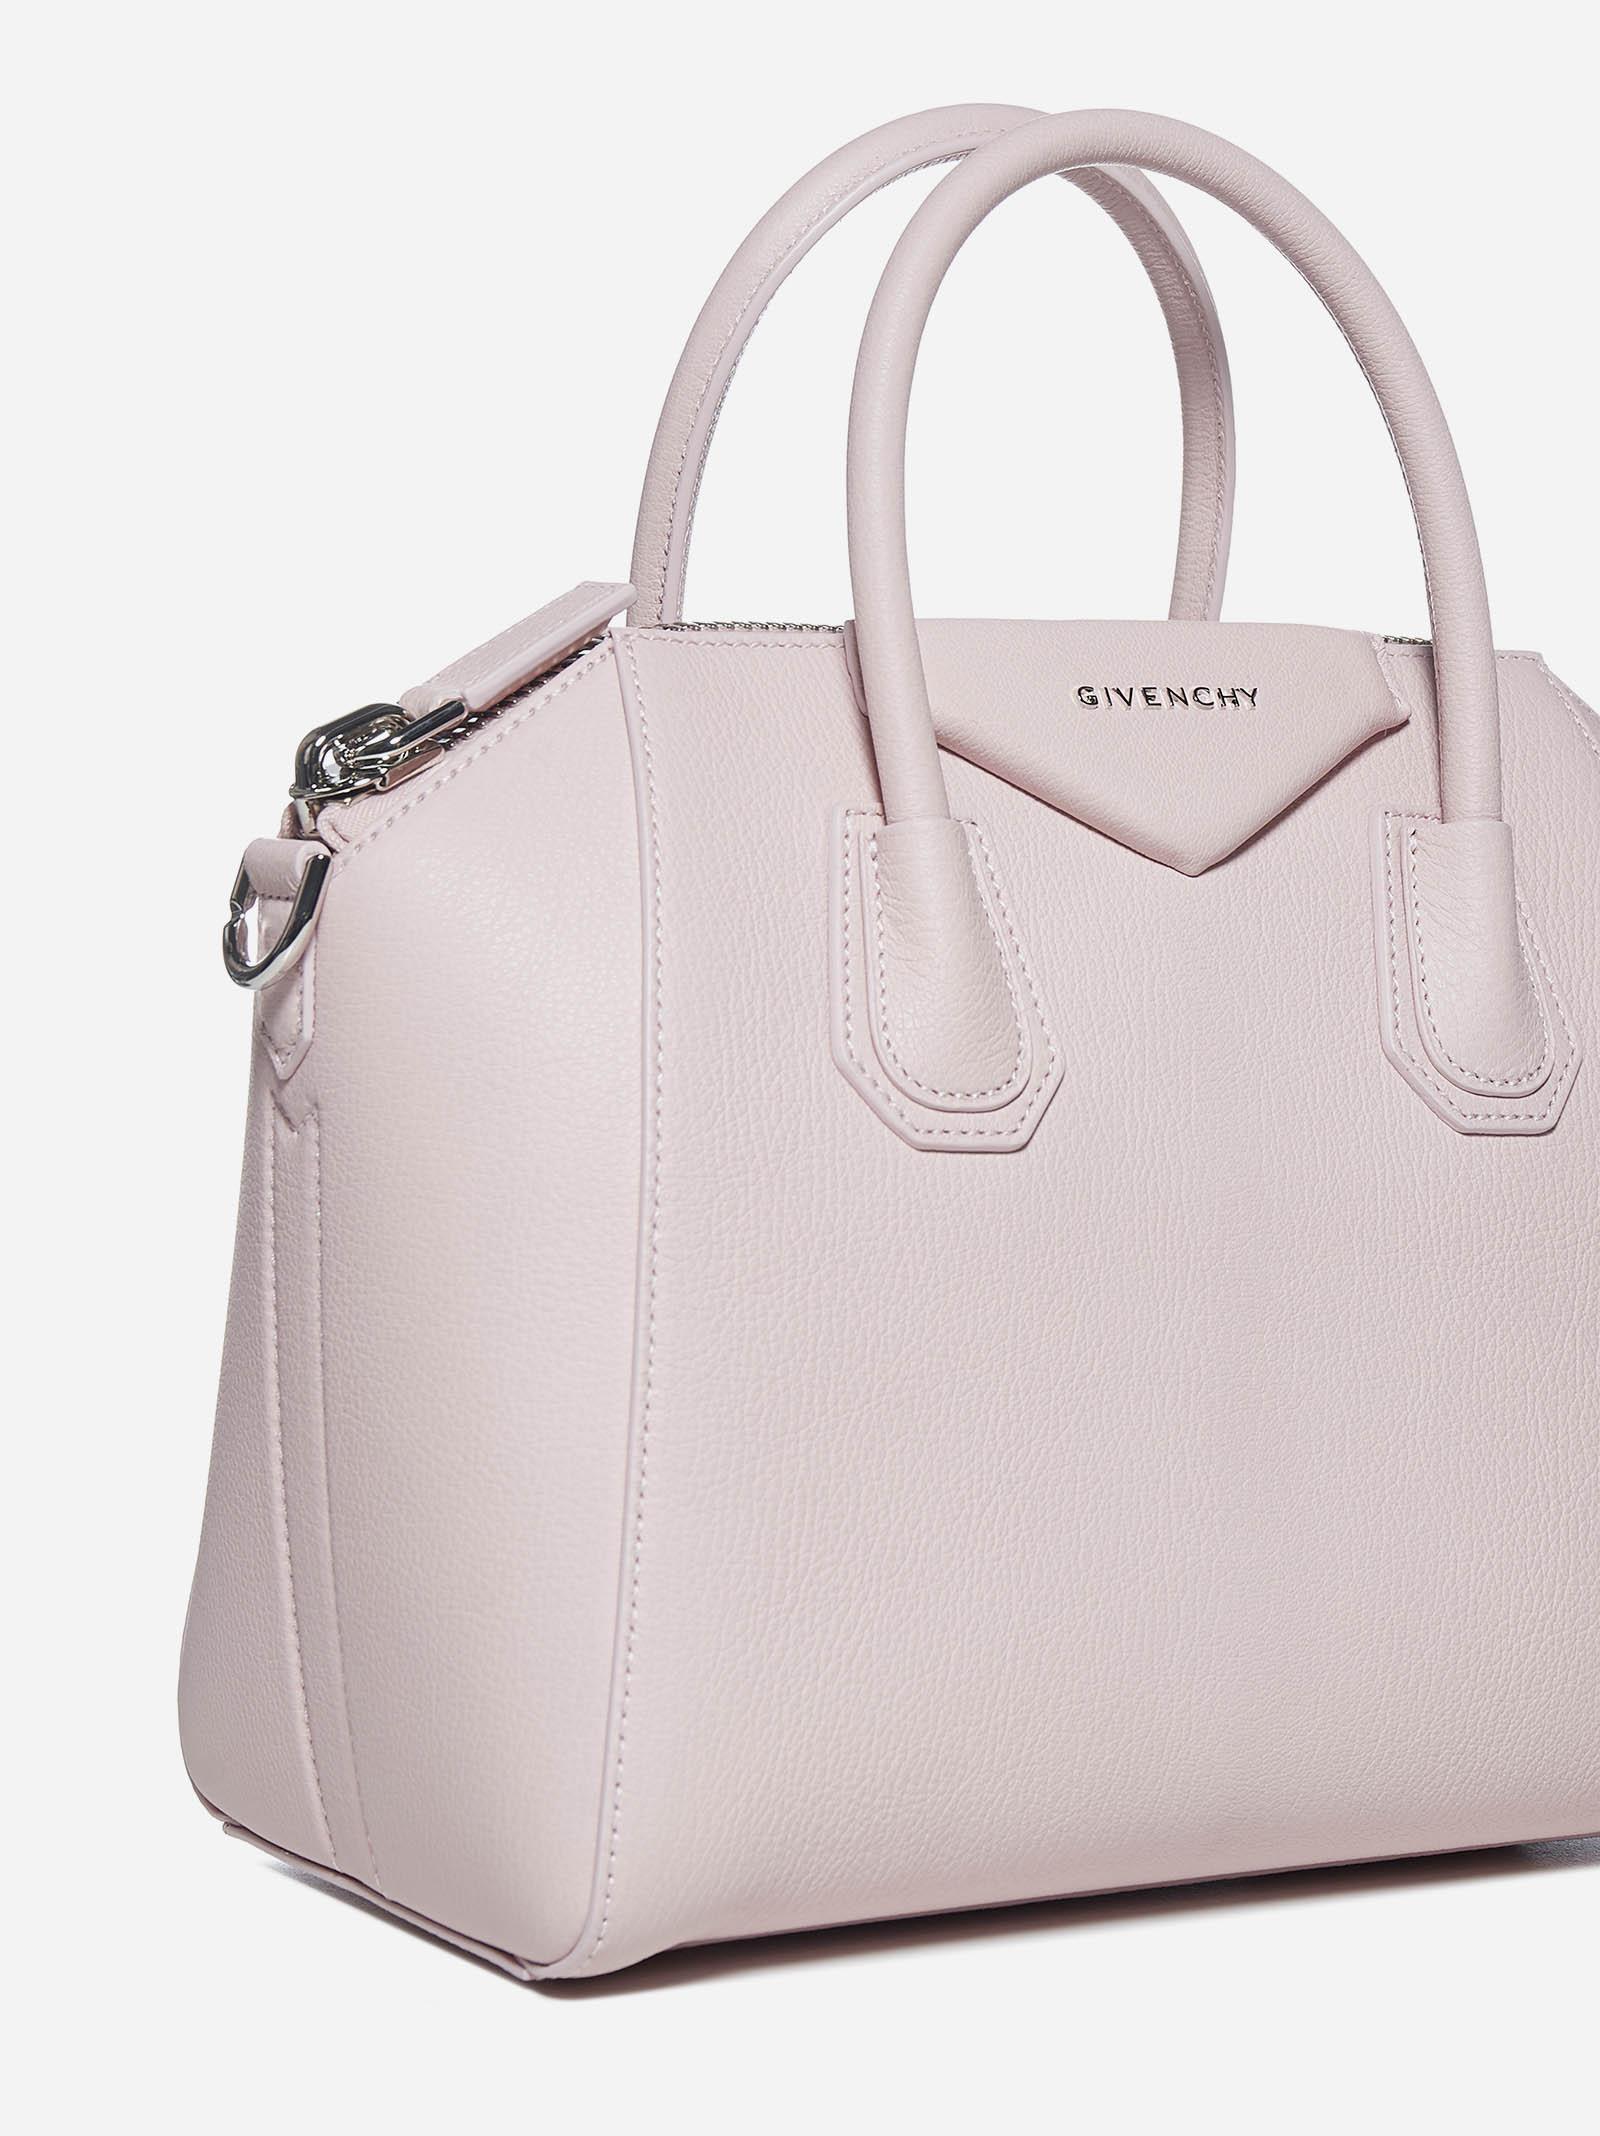 Givenchy Pink Micro Antigona Bag - ShopStyle